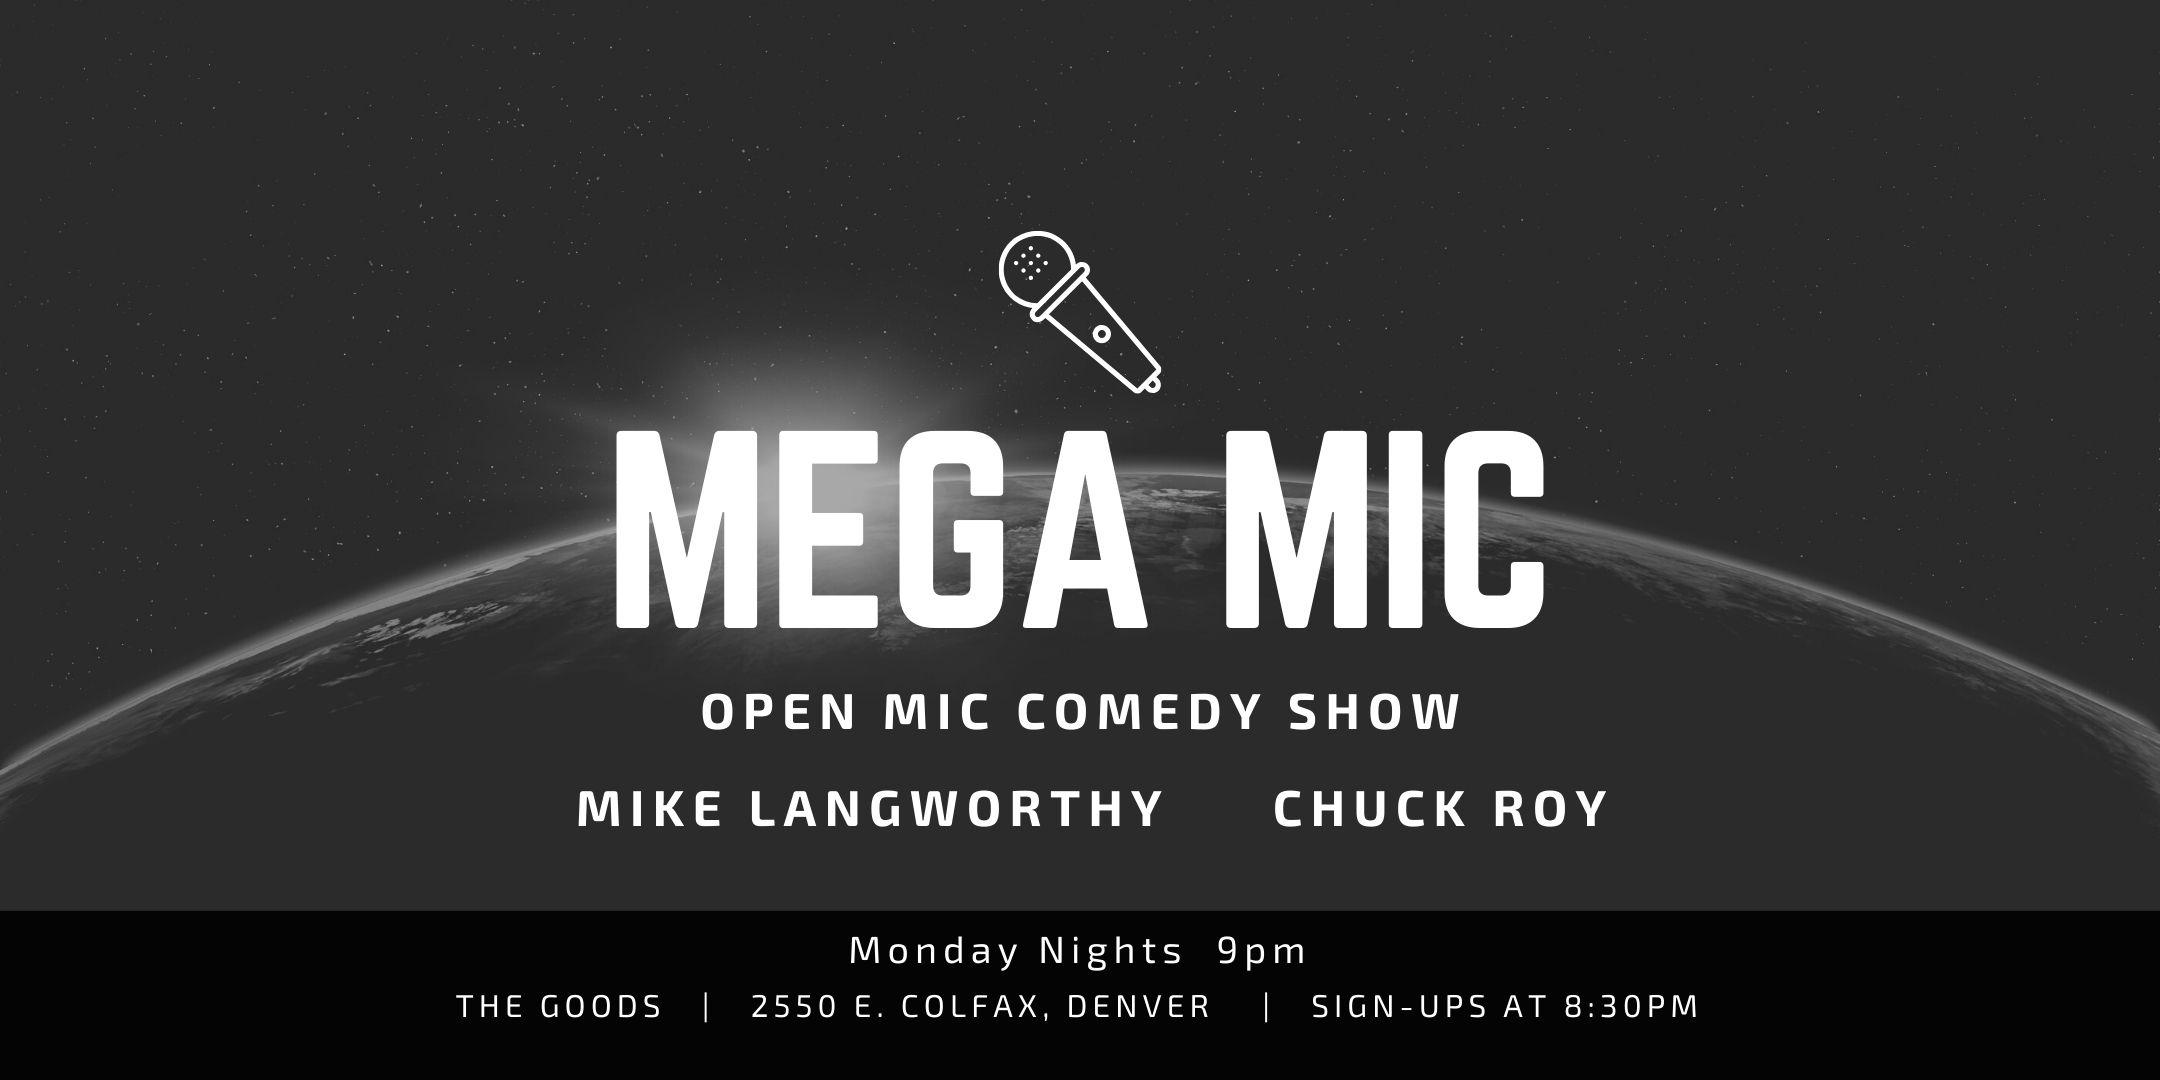 Mega Mic (Open Mic Comedy Show)